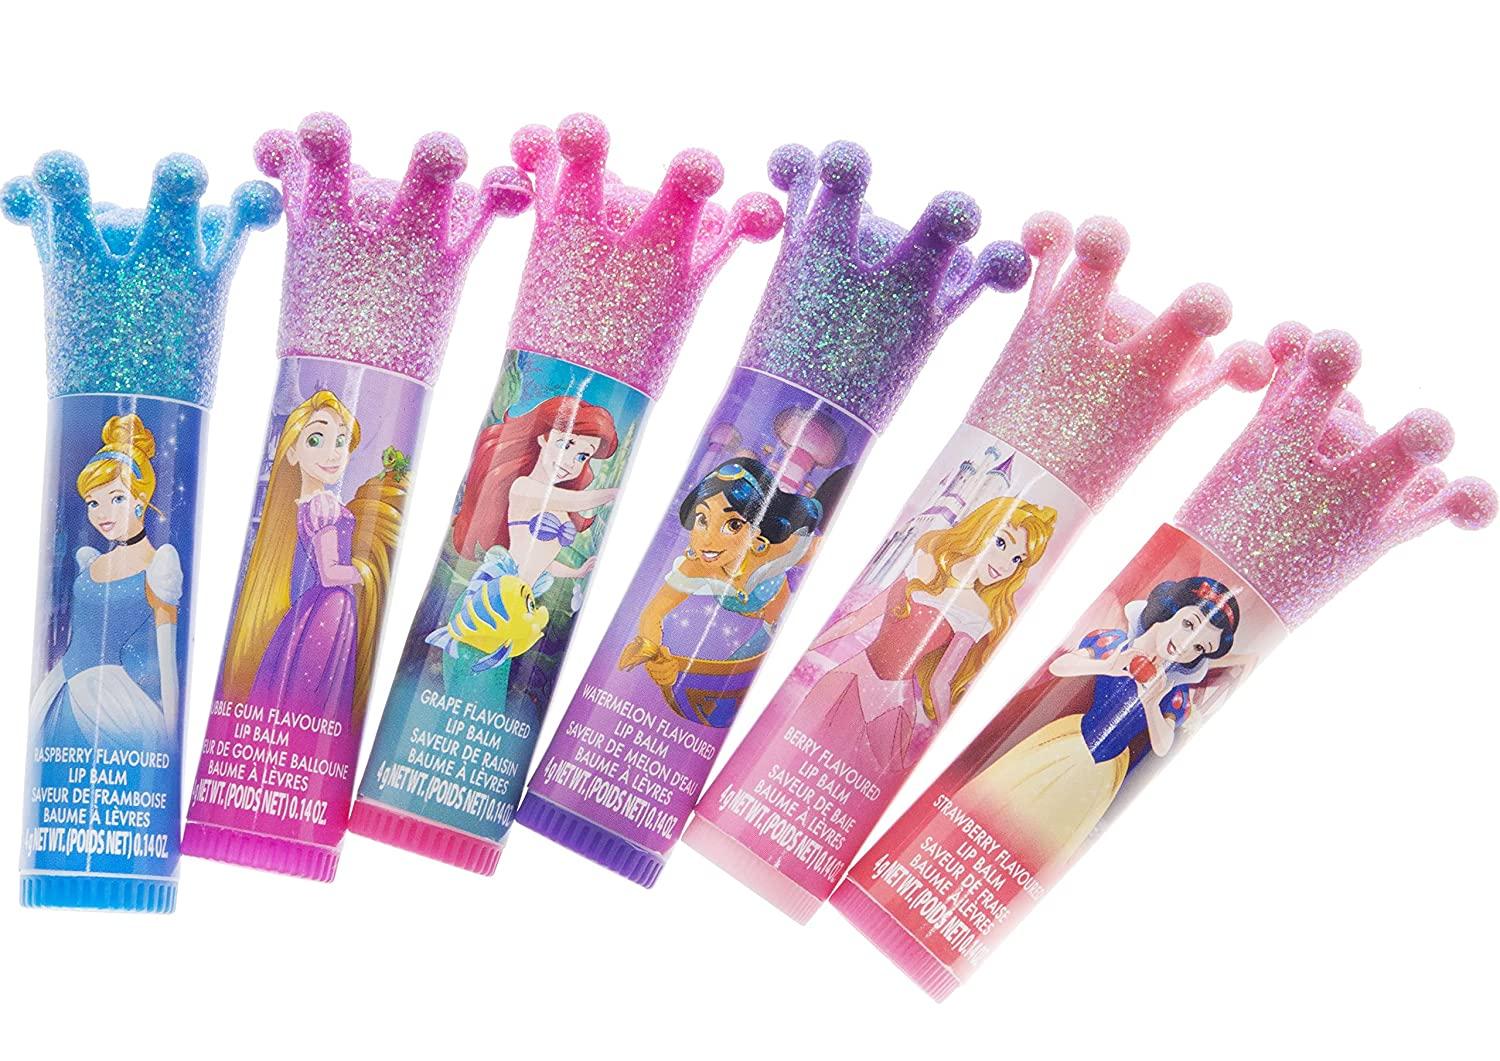 4. Townley Girl Disney Princess Non-Toxic Peel-Off Nail Polish Set for Kids - wide 2